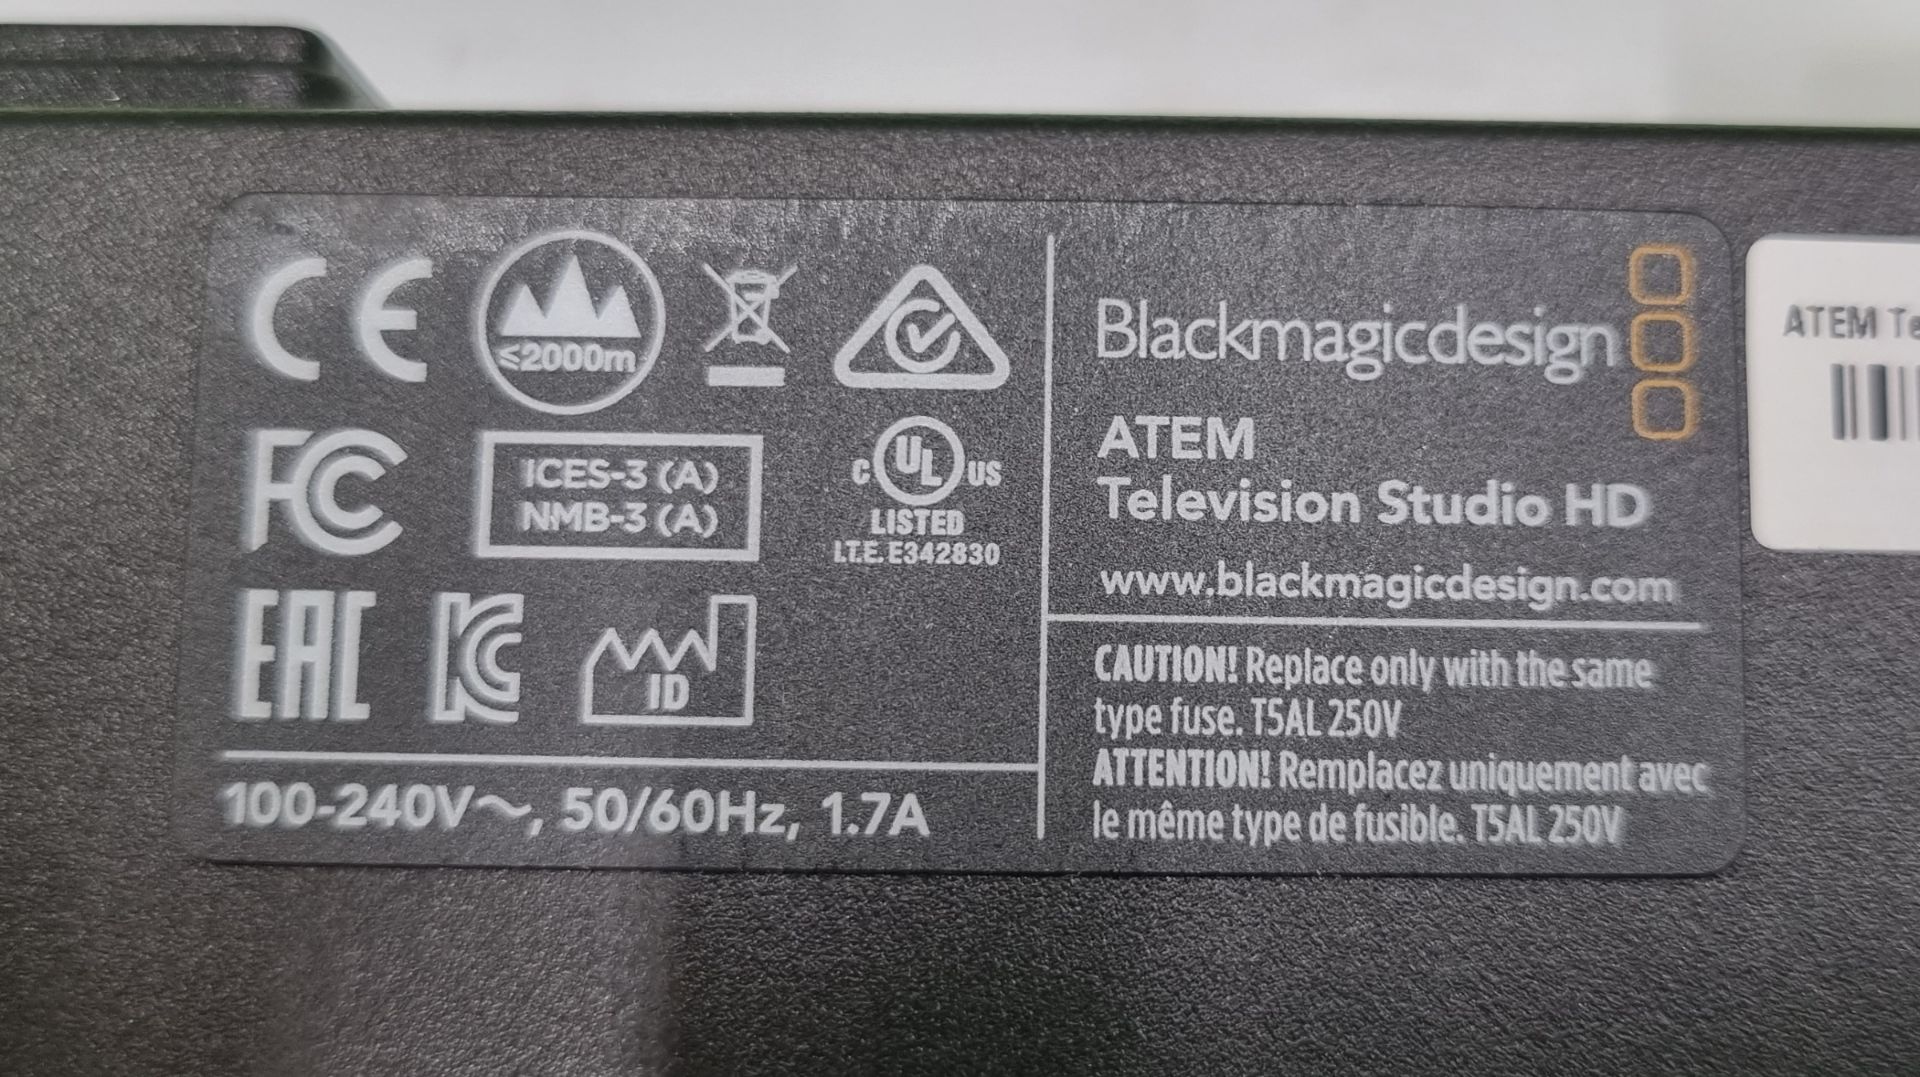 Blackmagic ATEM TV studio HD mixer - Image 11 of 11